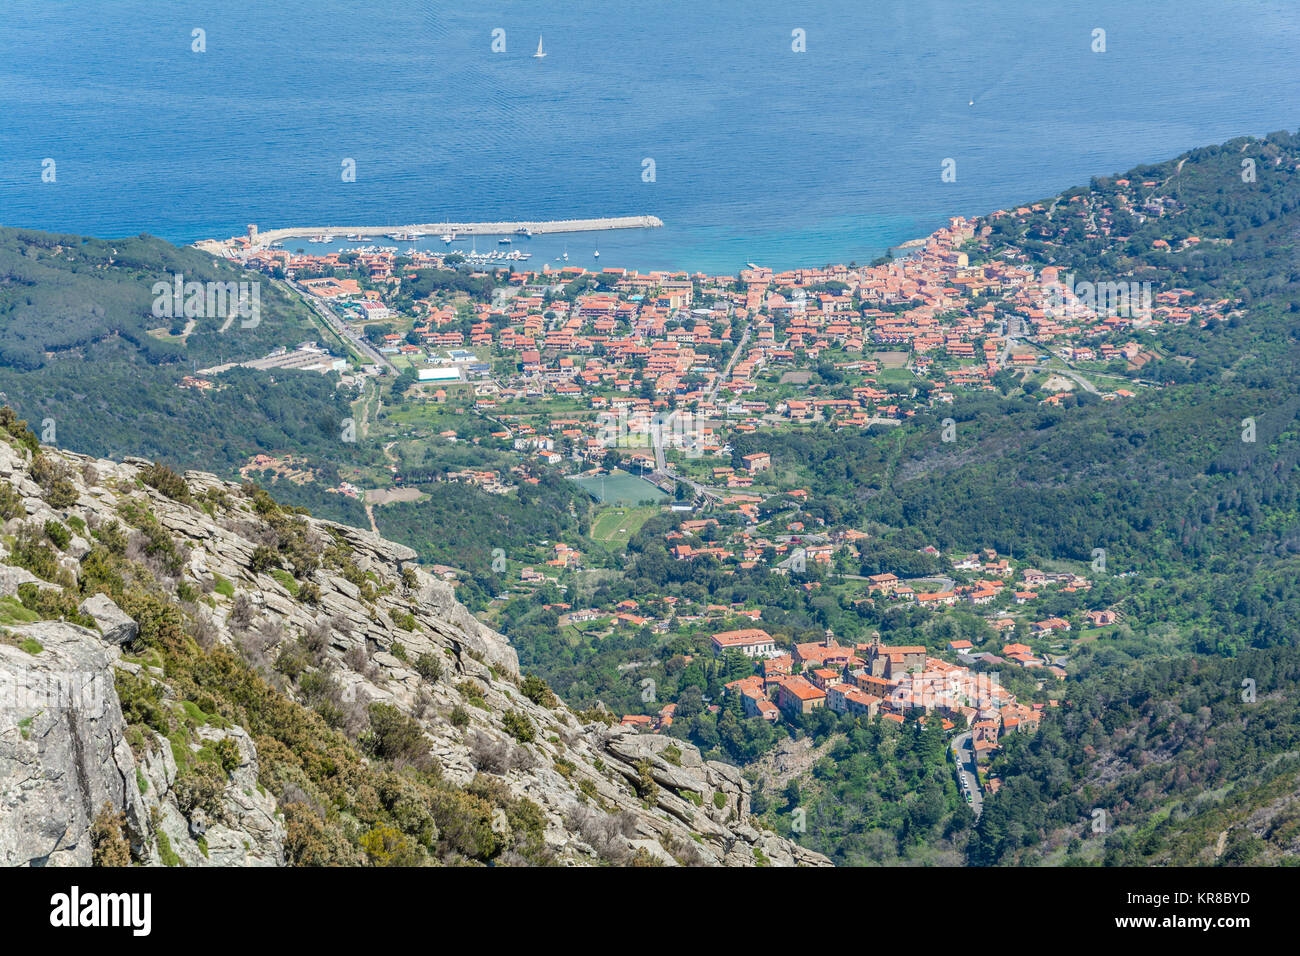 Marciana Marina view from the top of Capanne Mountain in Elba Island, Tuscany, Italy. Stock Photo